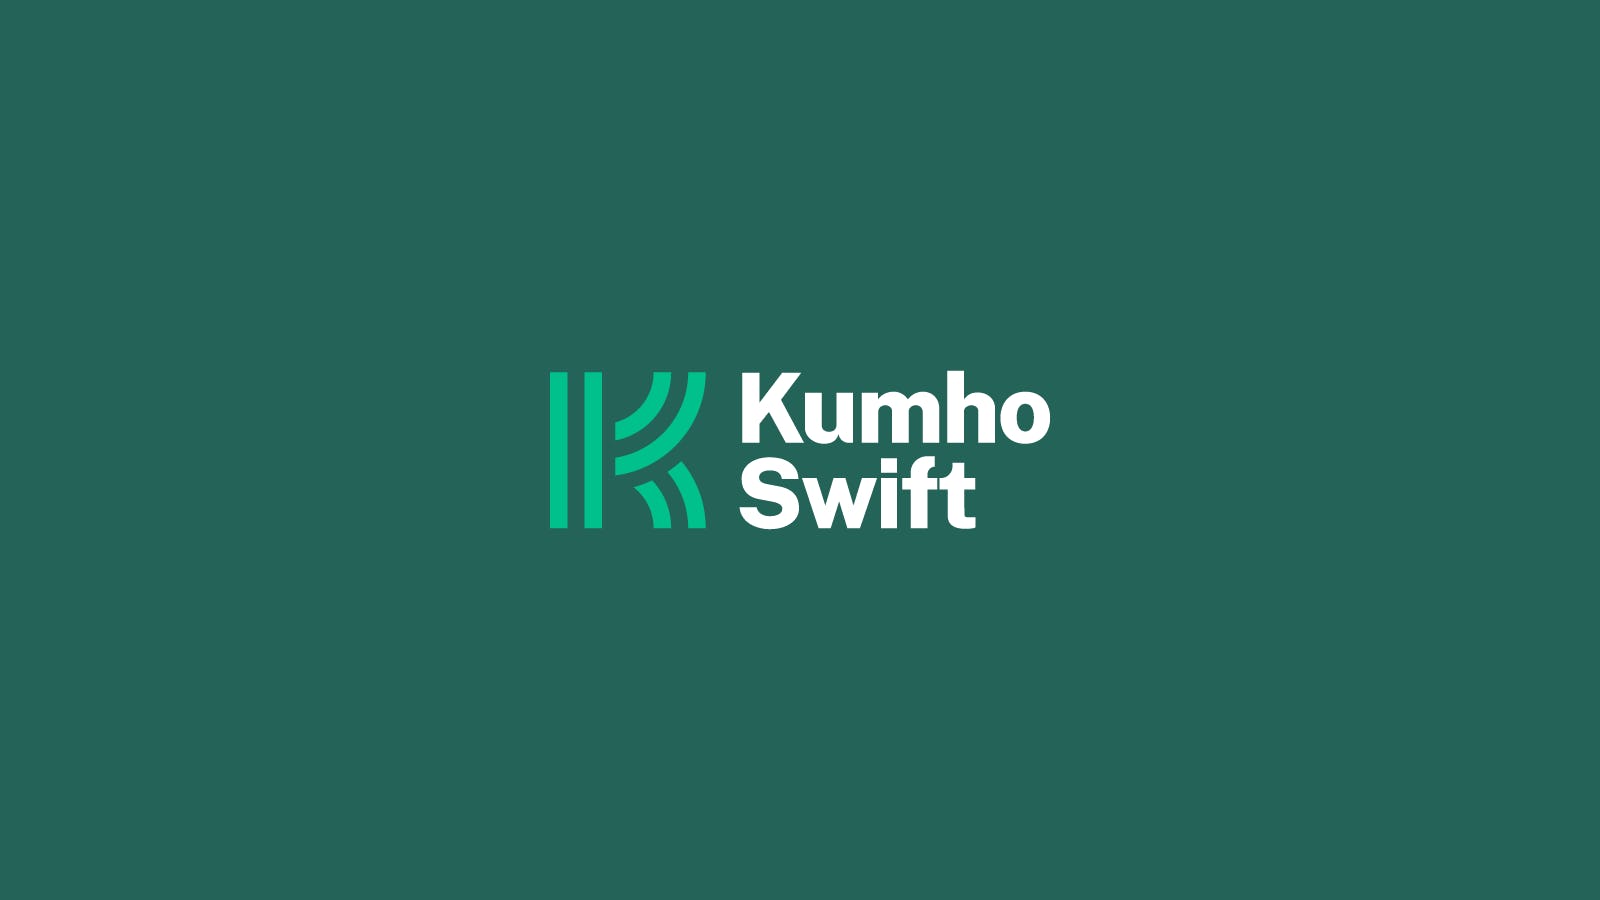 New Kumho Swift logo